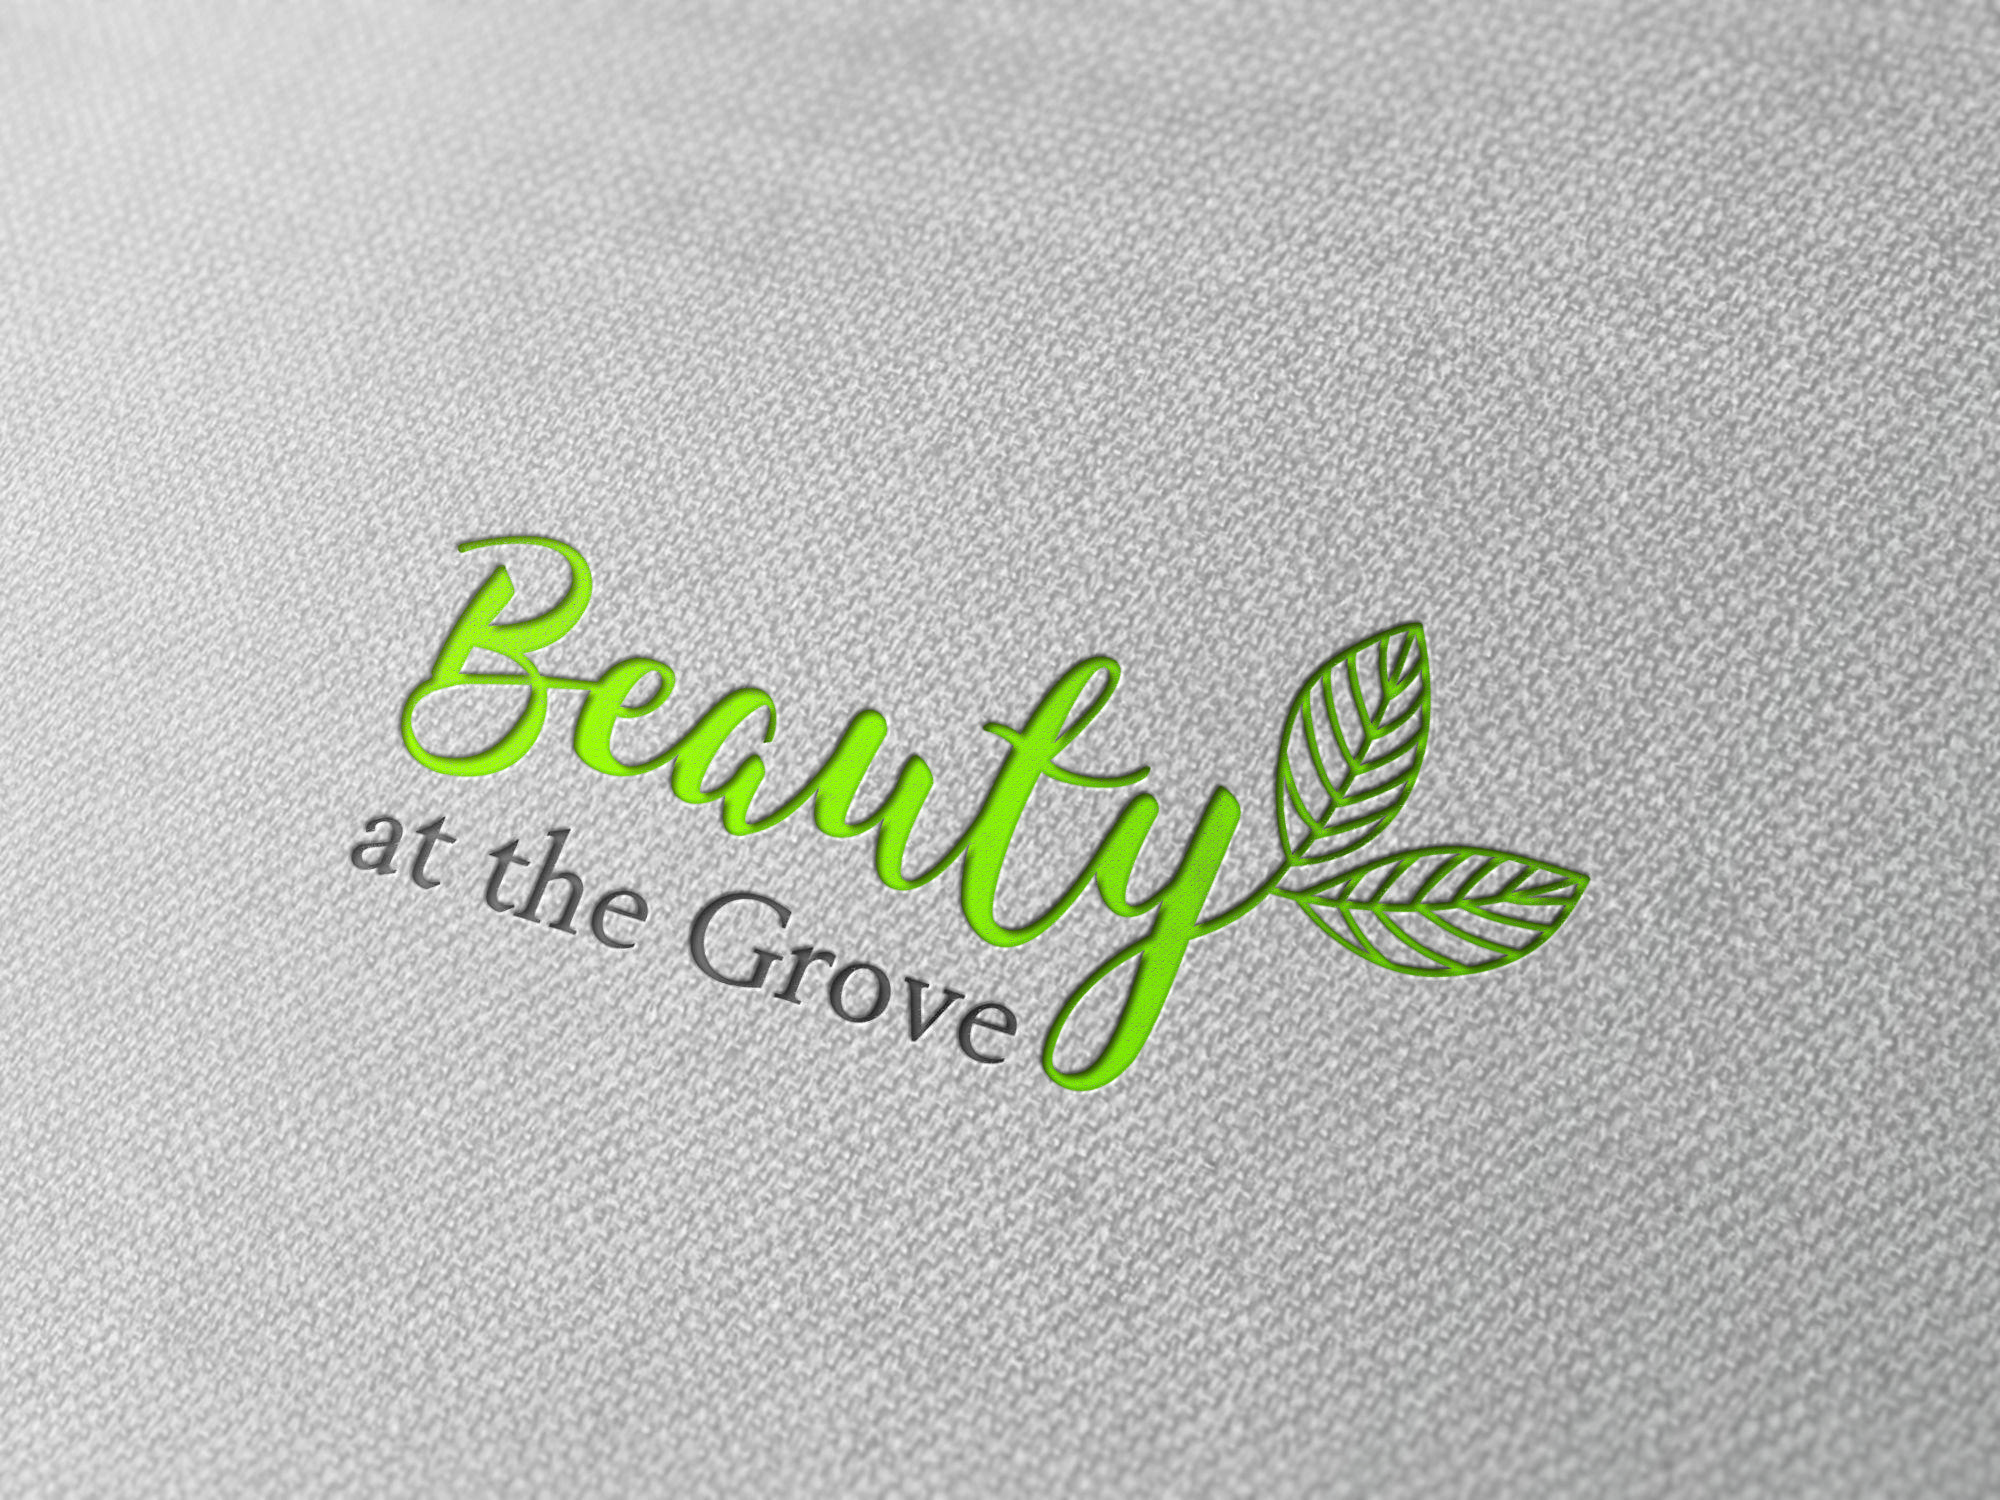 Grove Logo - Beauty at the Grove logo design | Northsouth Design Work | Pinterest ...